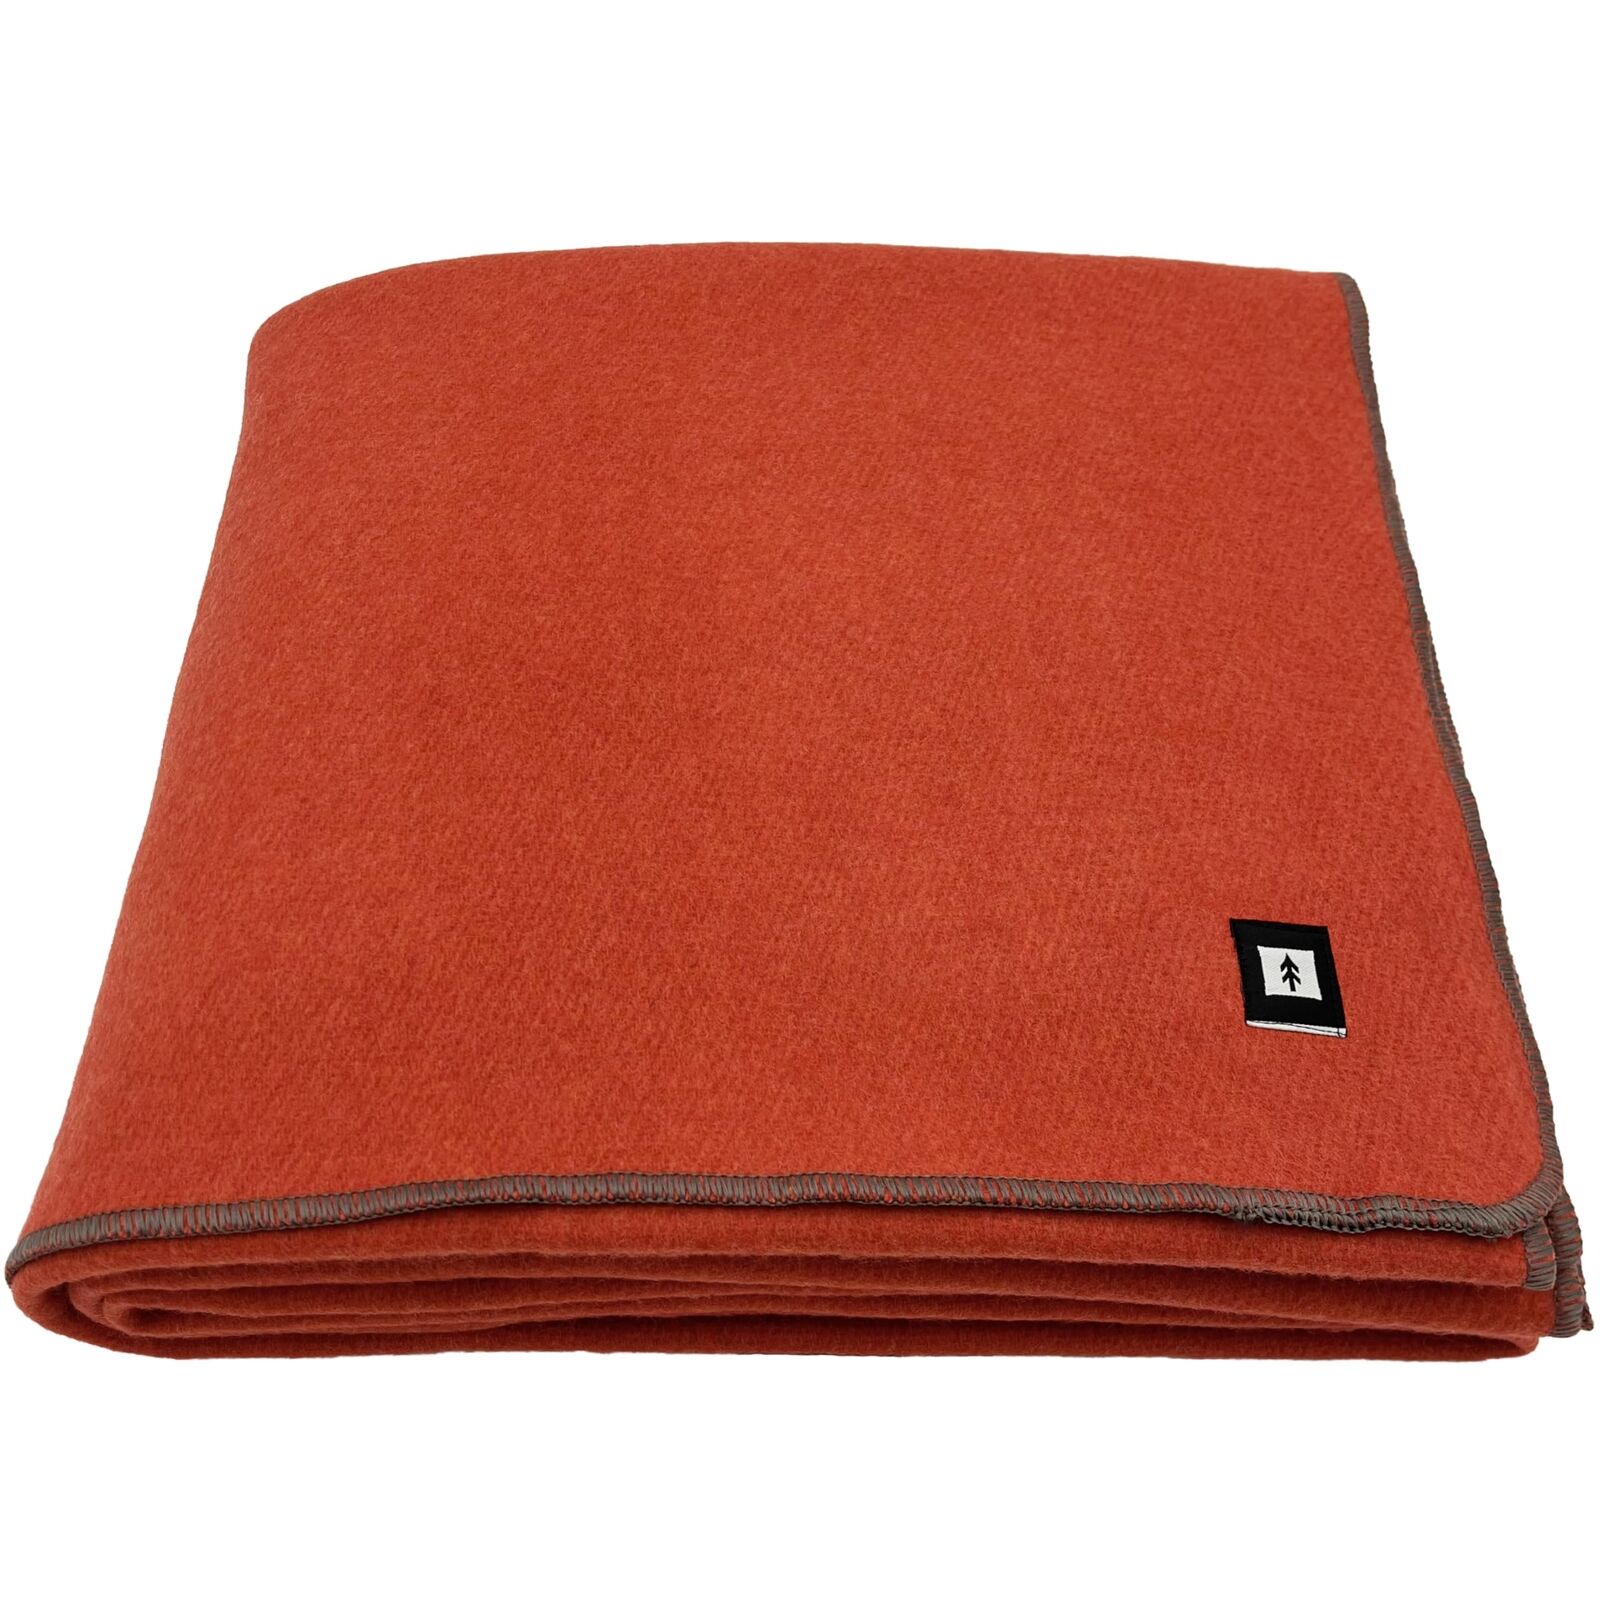 EKTOS 100% Wool Blanket Orange Warm& Heavy 5 lbs Large Washable 66x90 NEW